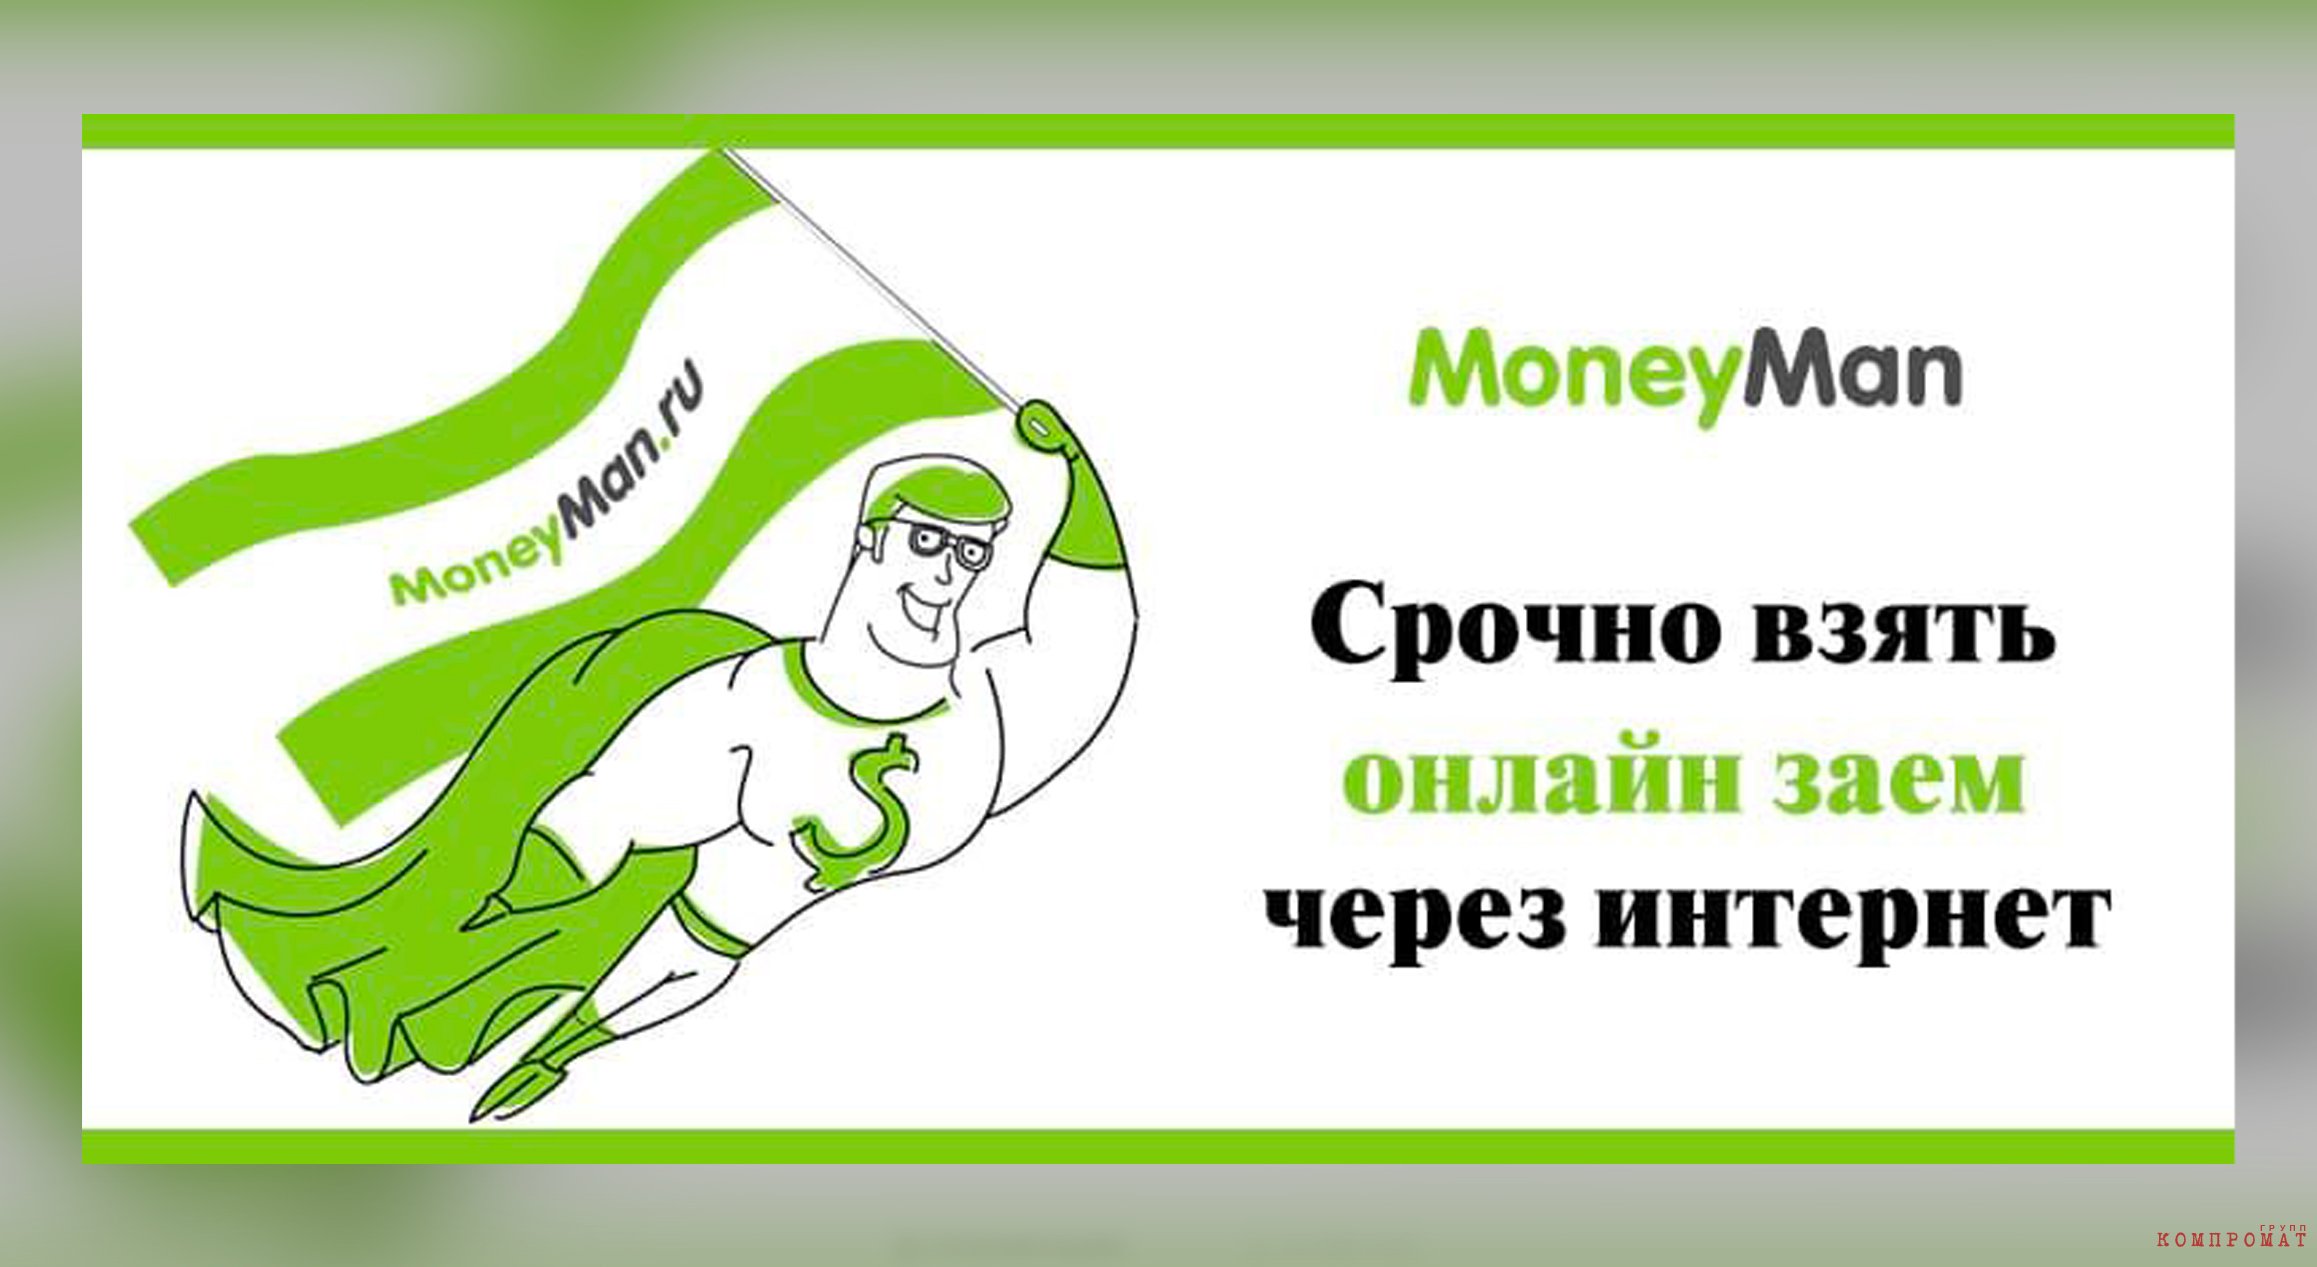  MoneyMan —   ,  ,  queiqkxihxirx qhiqhhiqetiqtzatf